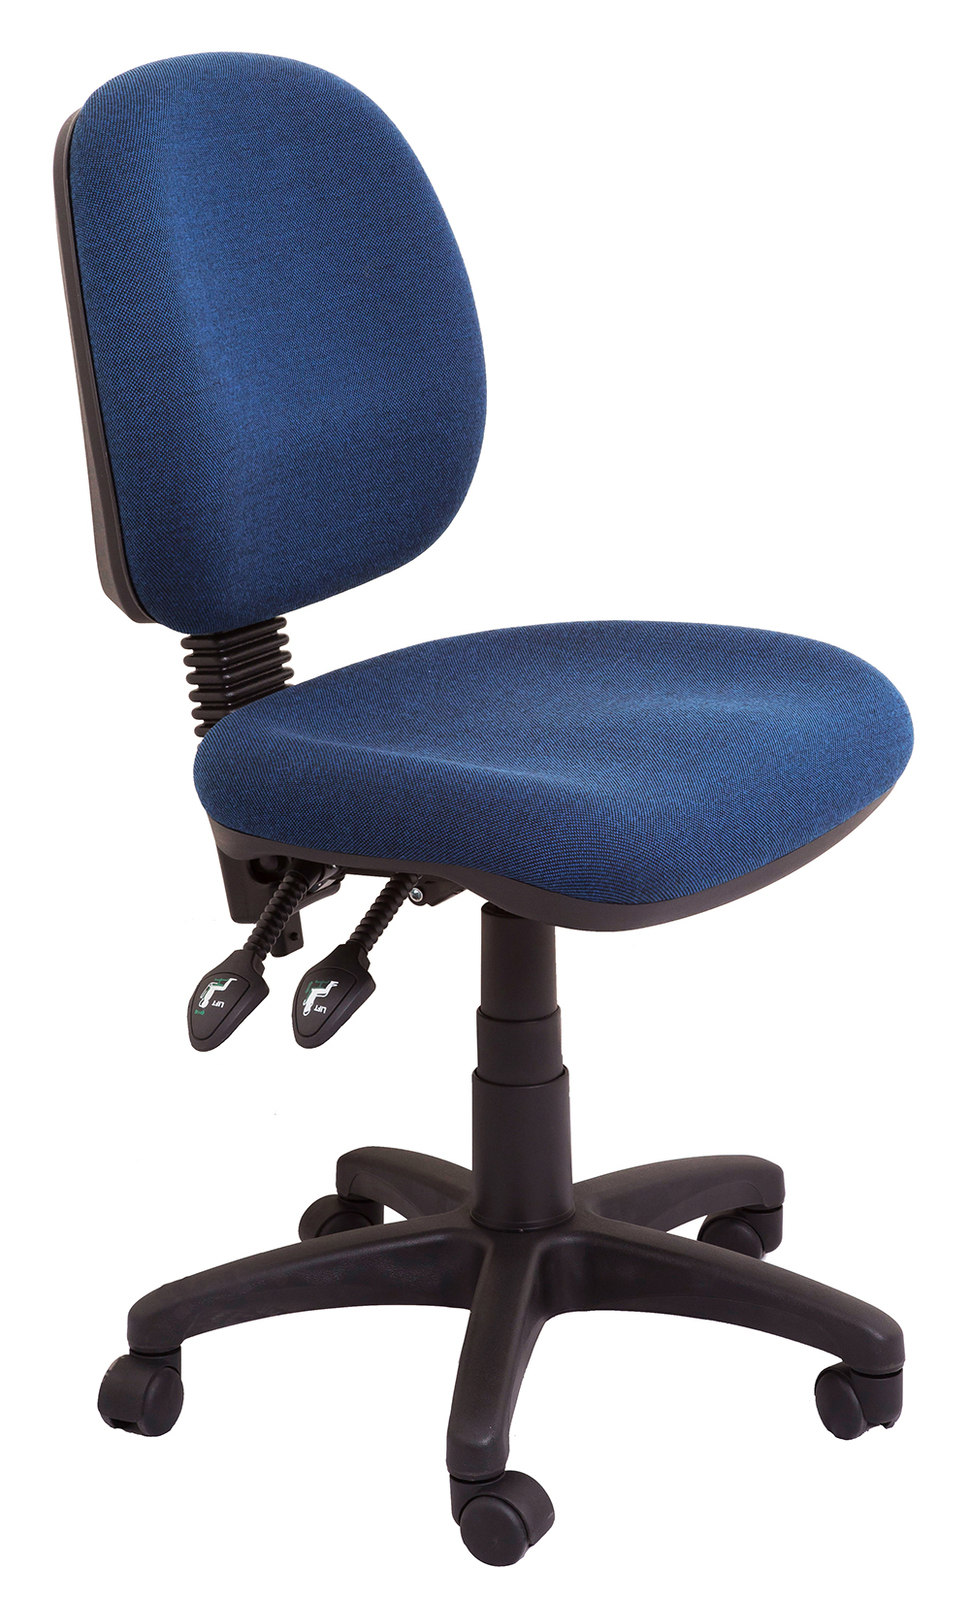 Comfort Medium Back 3 Lever Adjustable Office Computer Chair| Office Stock